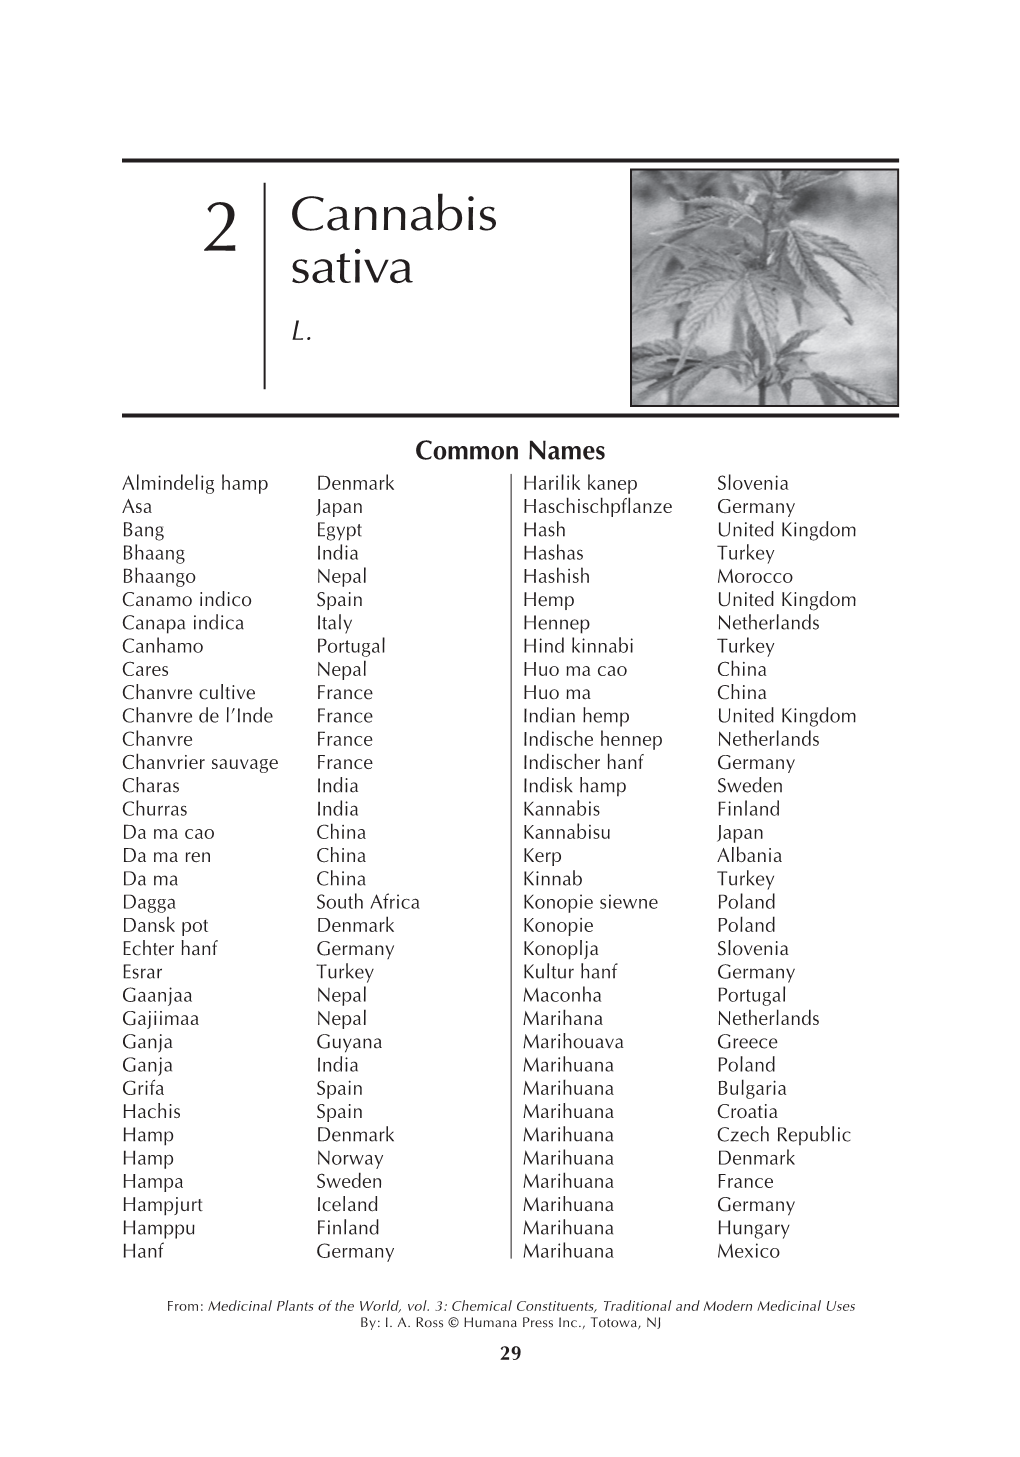 2 Cannabis Sativa L